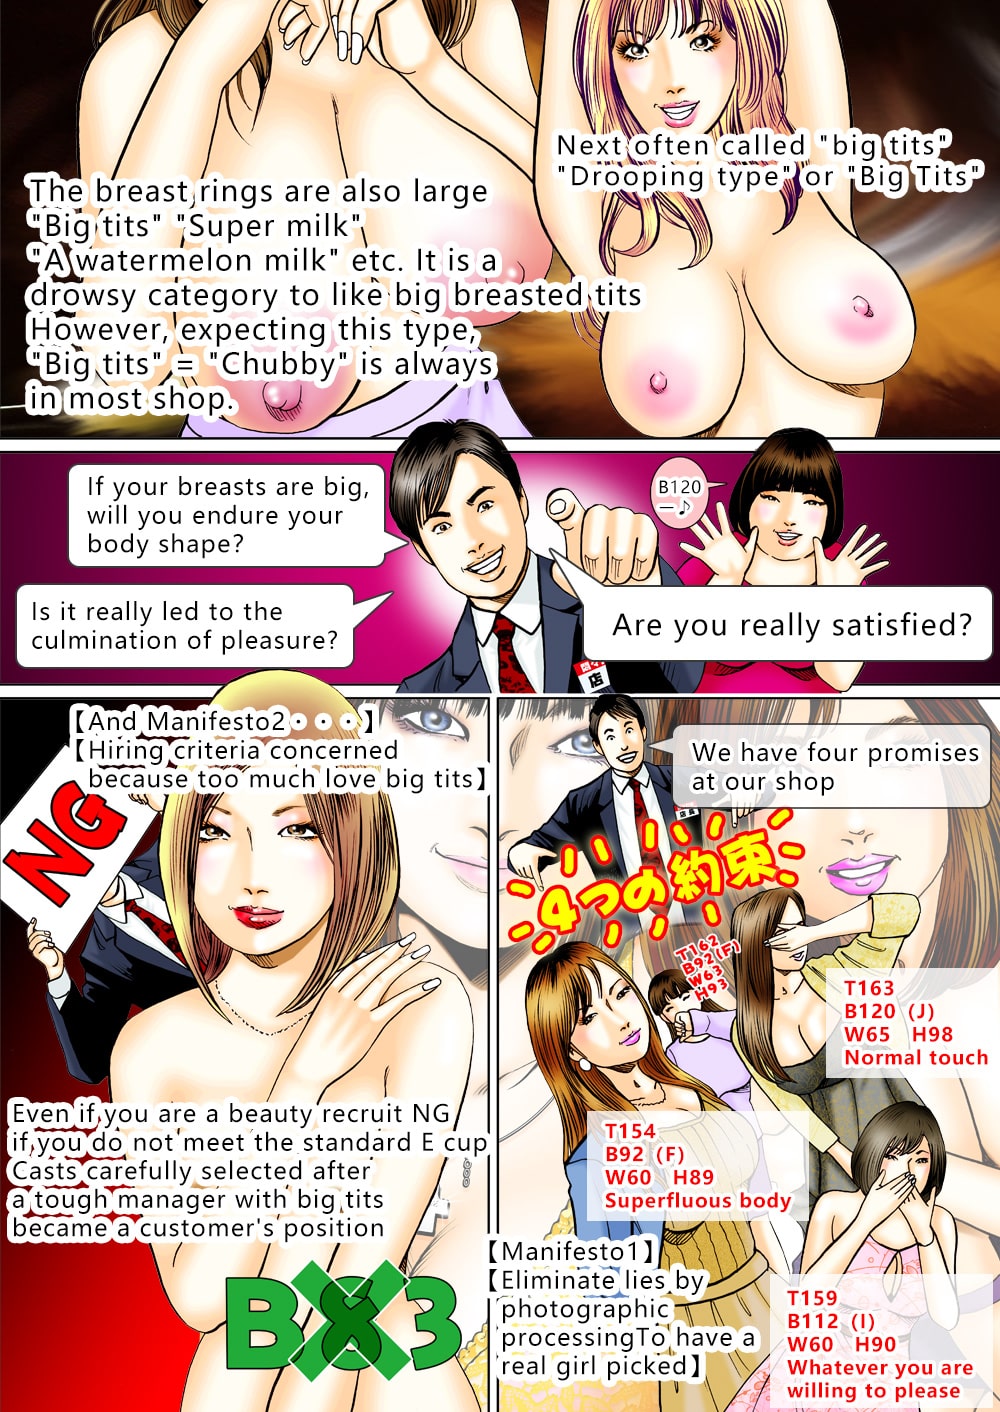 Erotic experience manga1